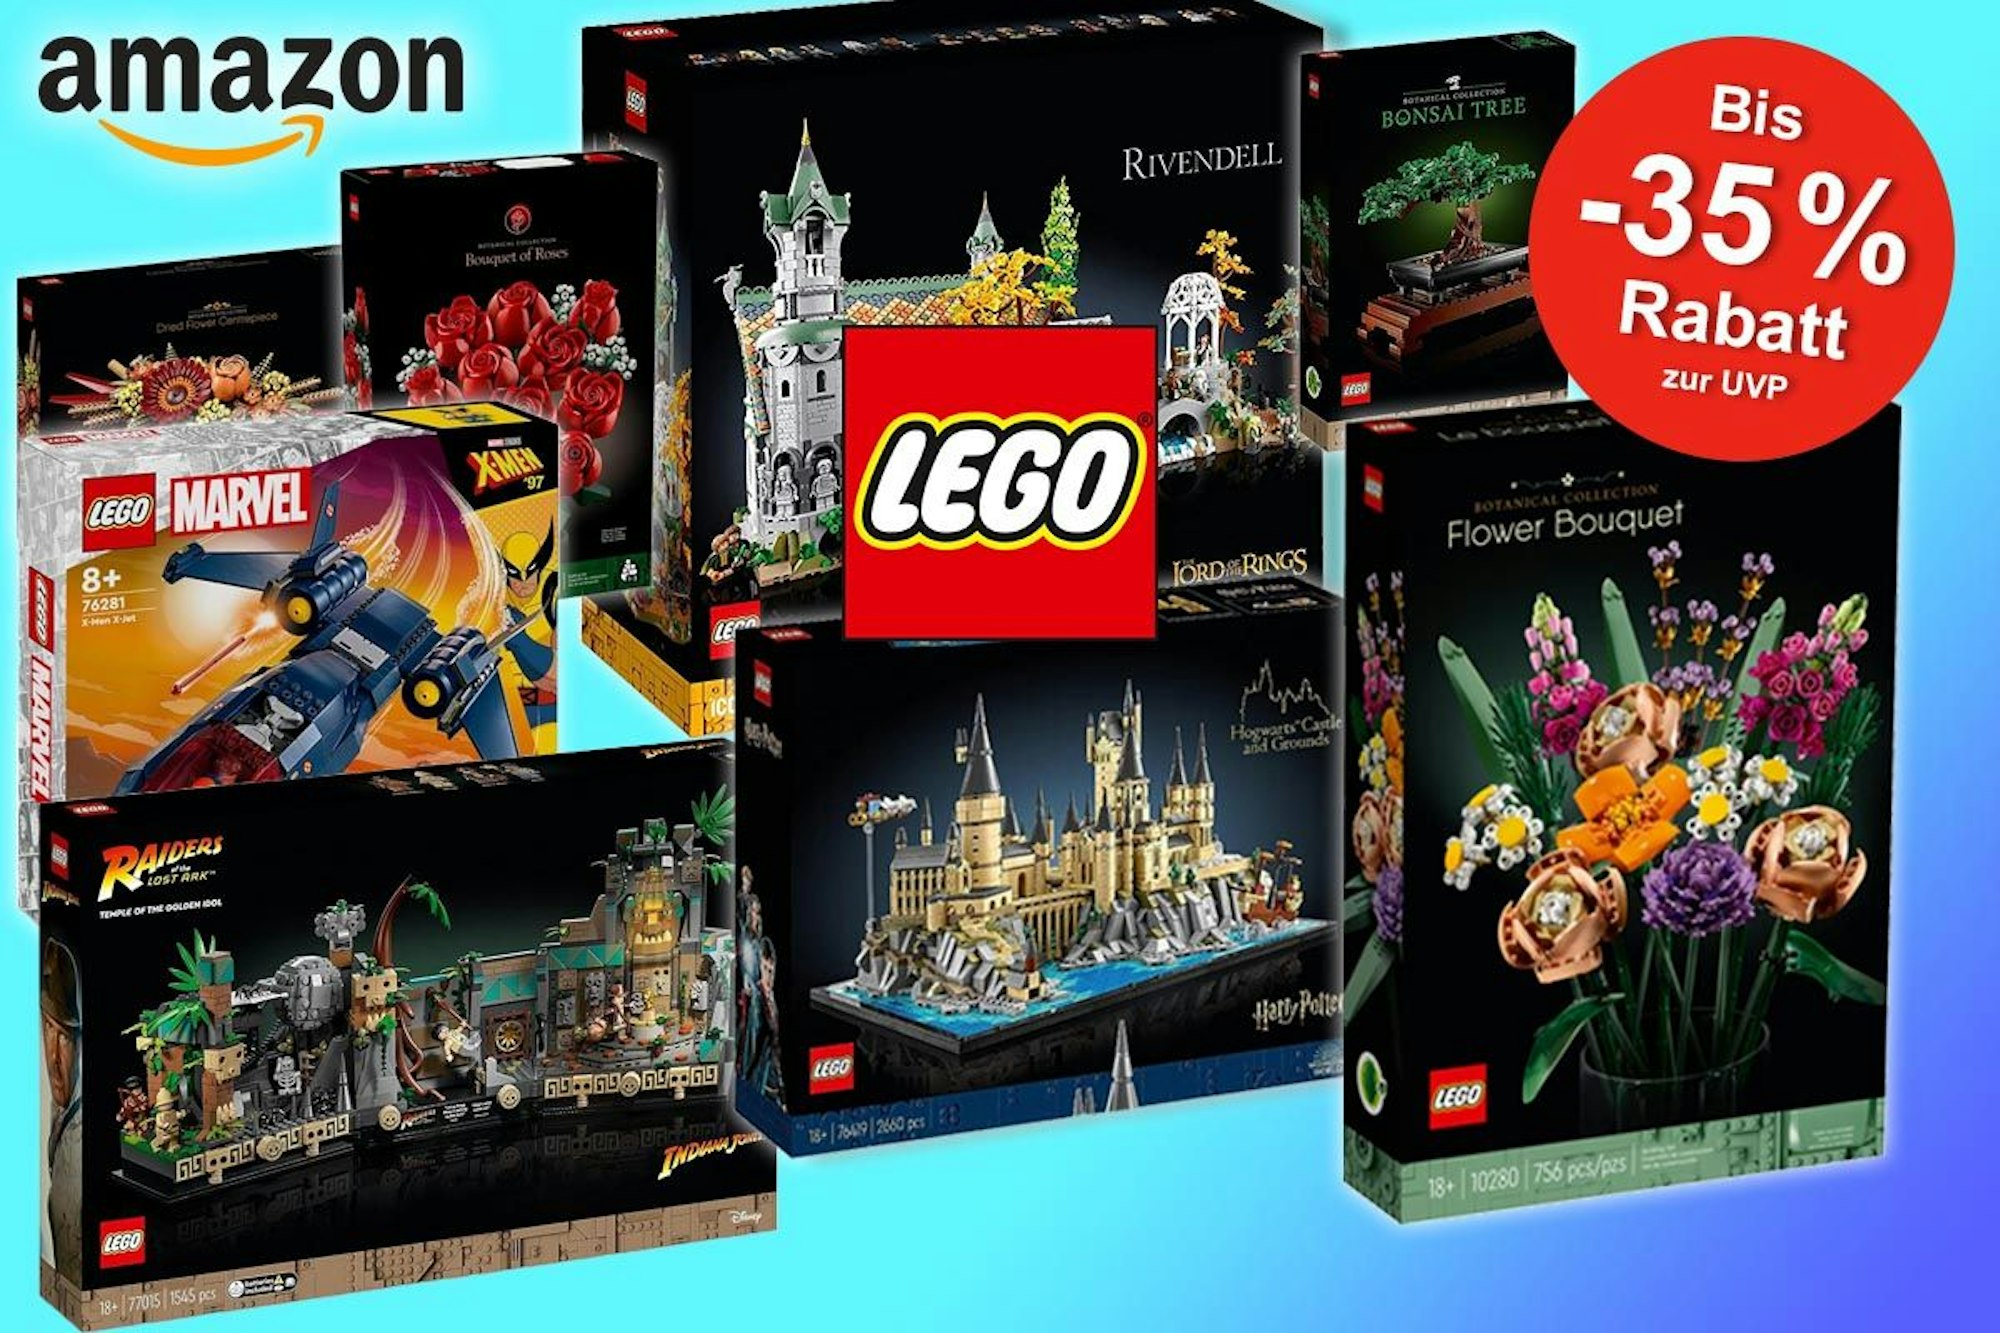 Lego Sets von Lego Botanik Kollektion, Marvel, Indiana Jones, Harry Potter bei Amazon.